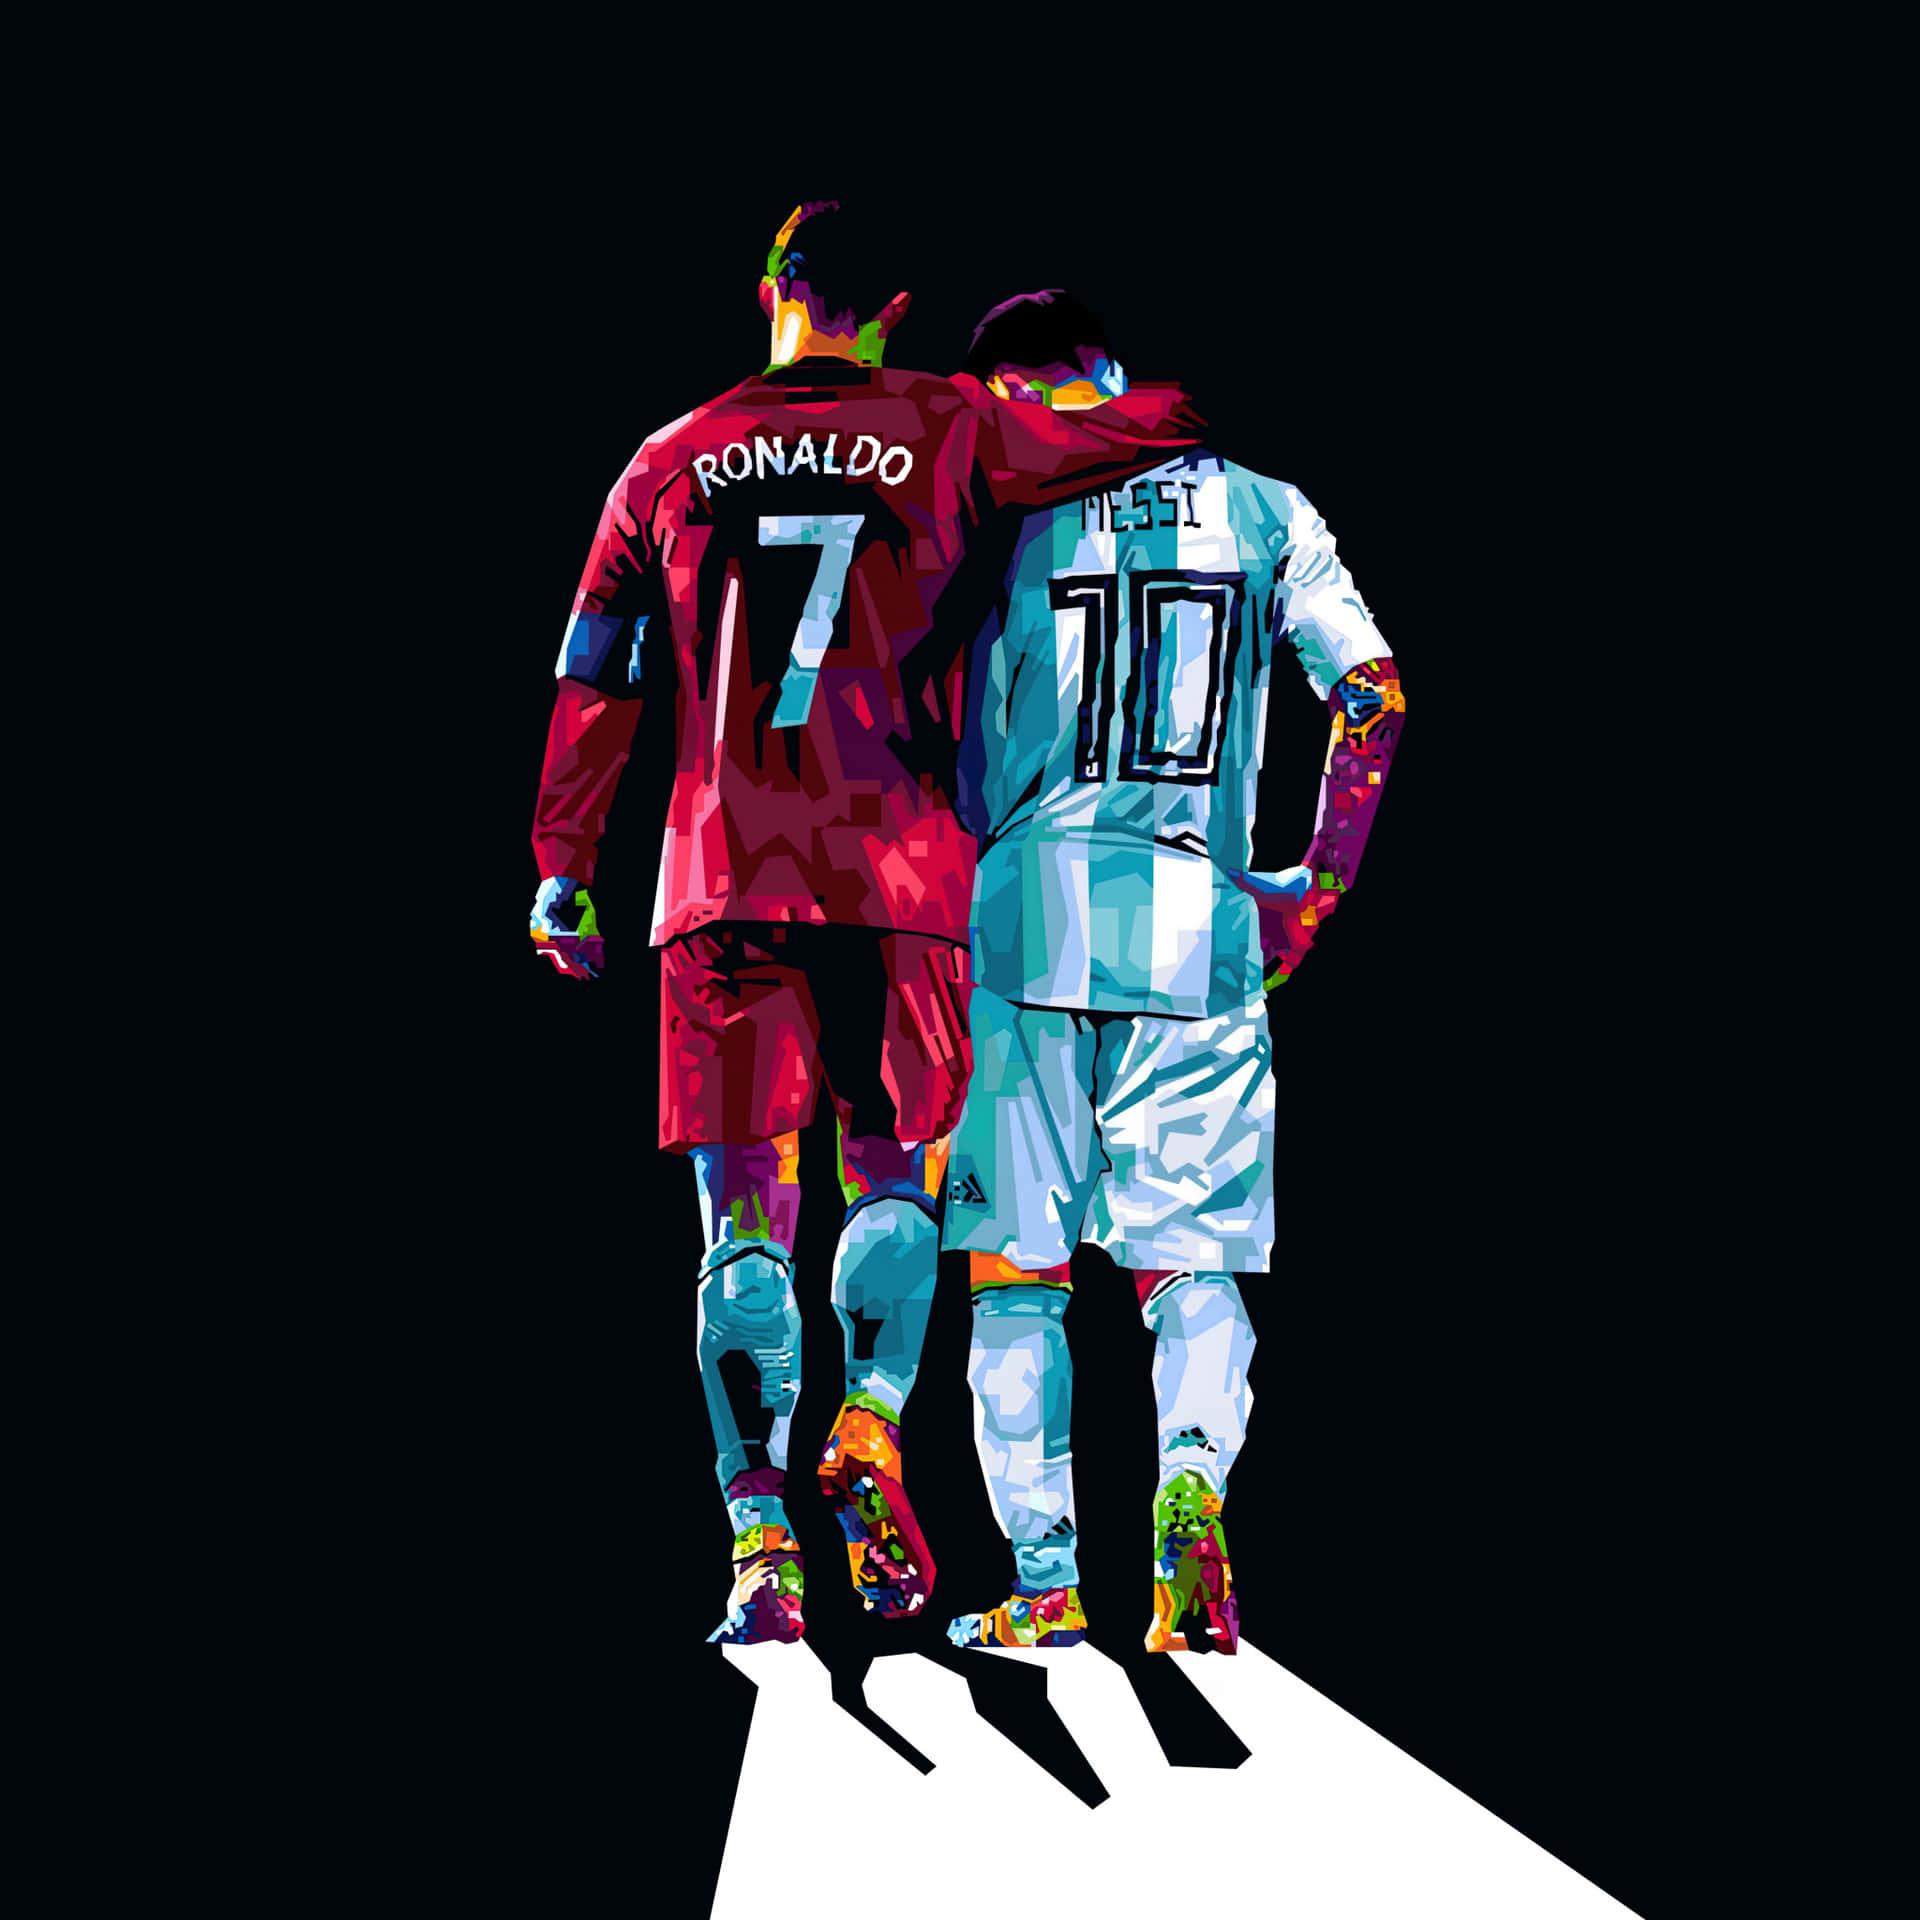 Ronaldoand Messi Friendship Artwork Wallpaper